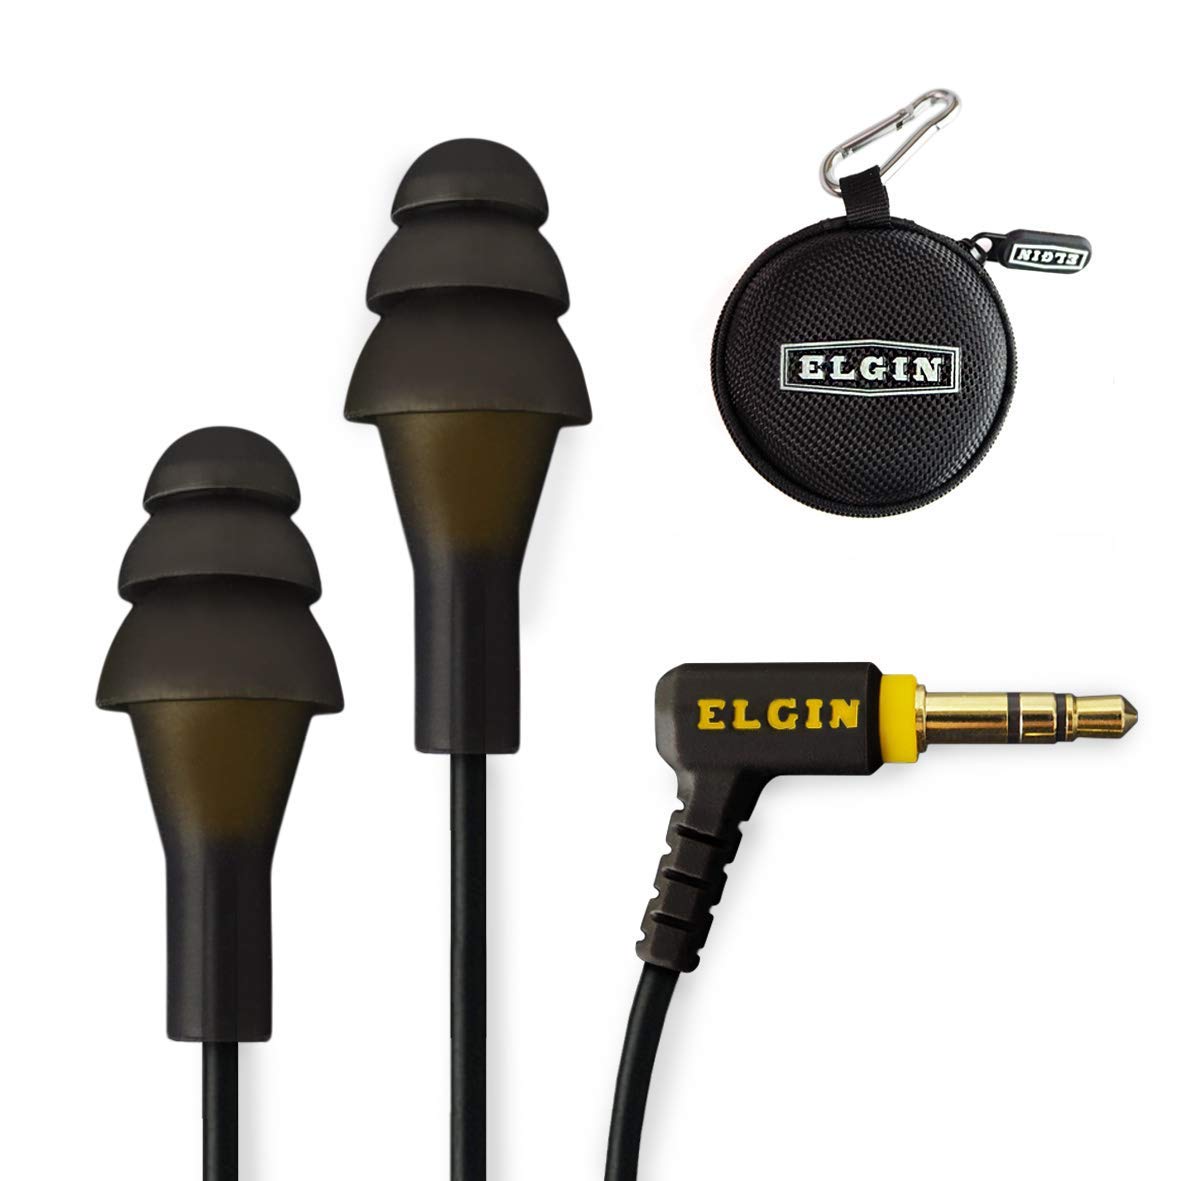 Elgin سماعات Ruckus Earplug | سماعات الأذن المتوافقة مع OSHA للحد من الضوضاء: عزل سماعات الأذن